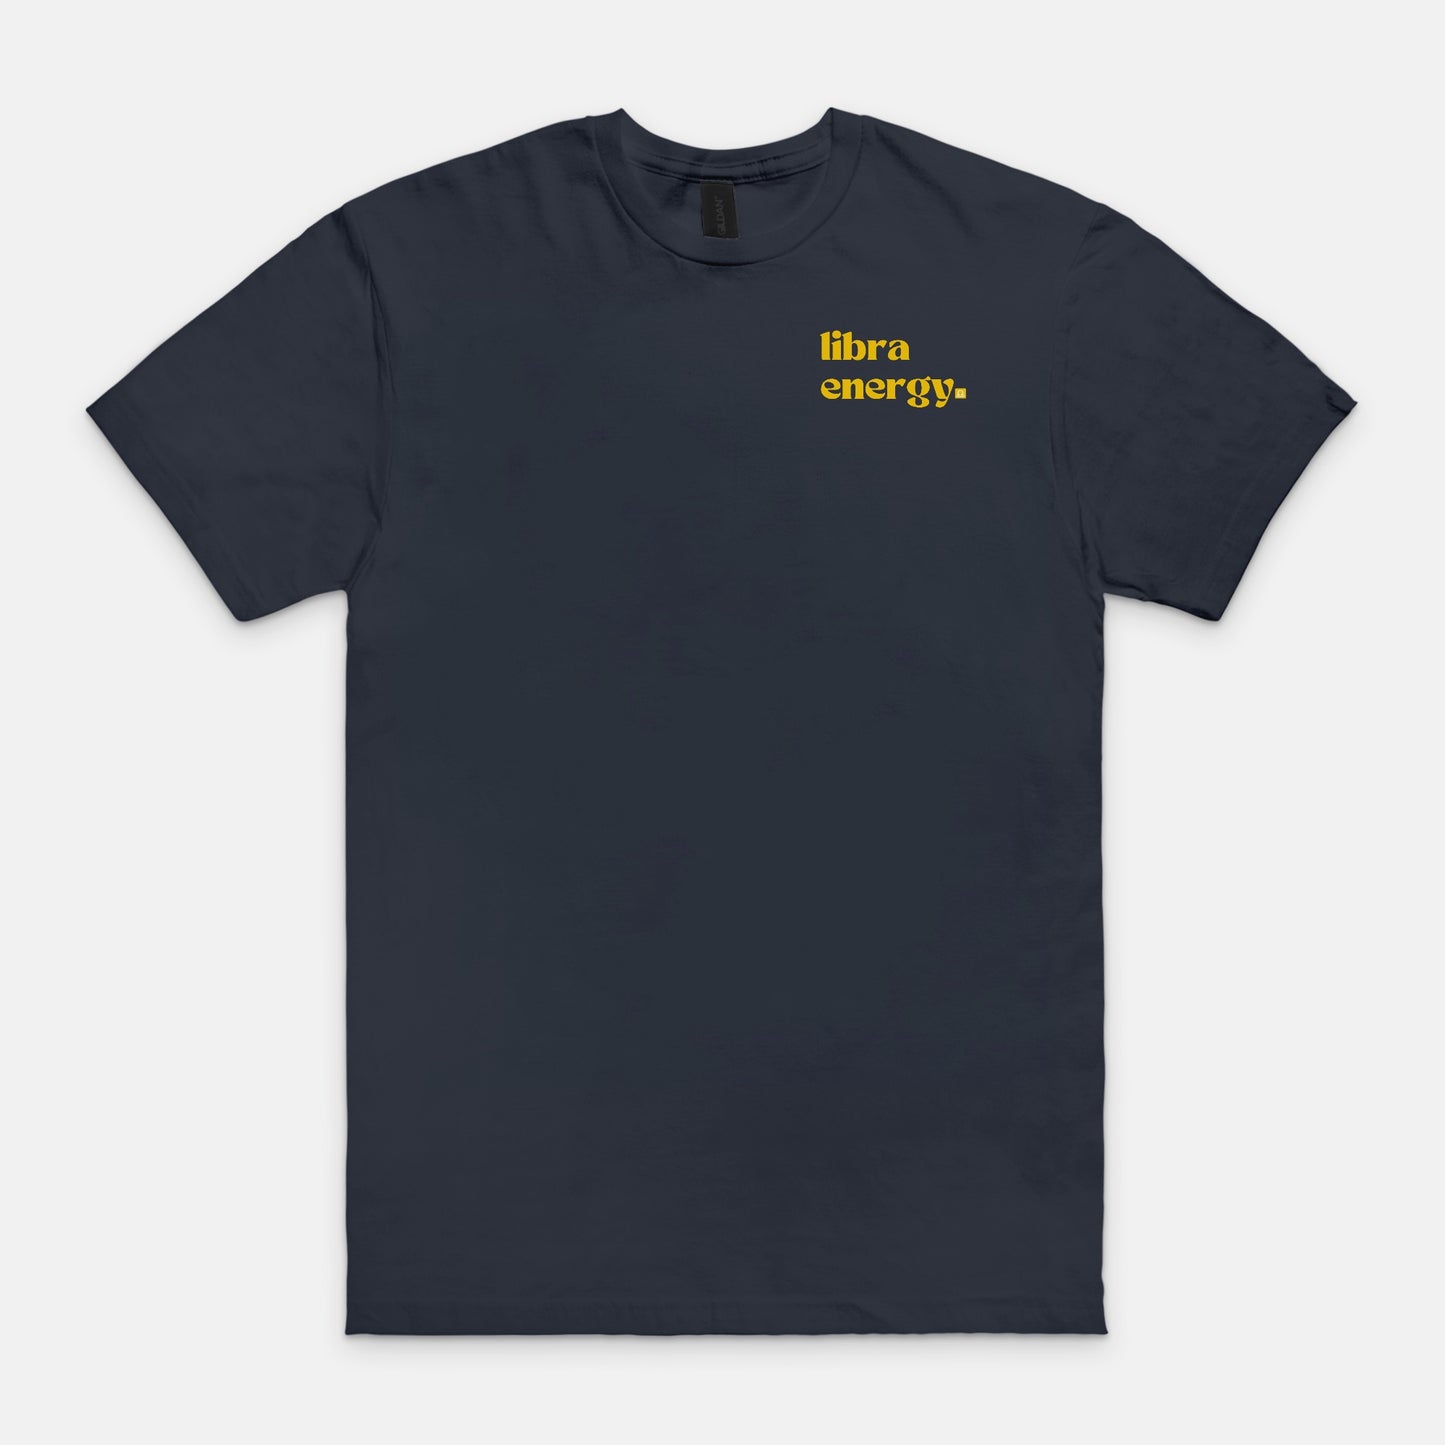 Libra Energy T-shirt